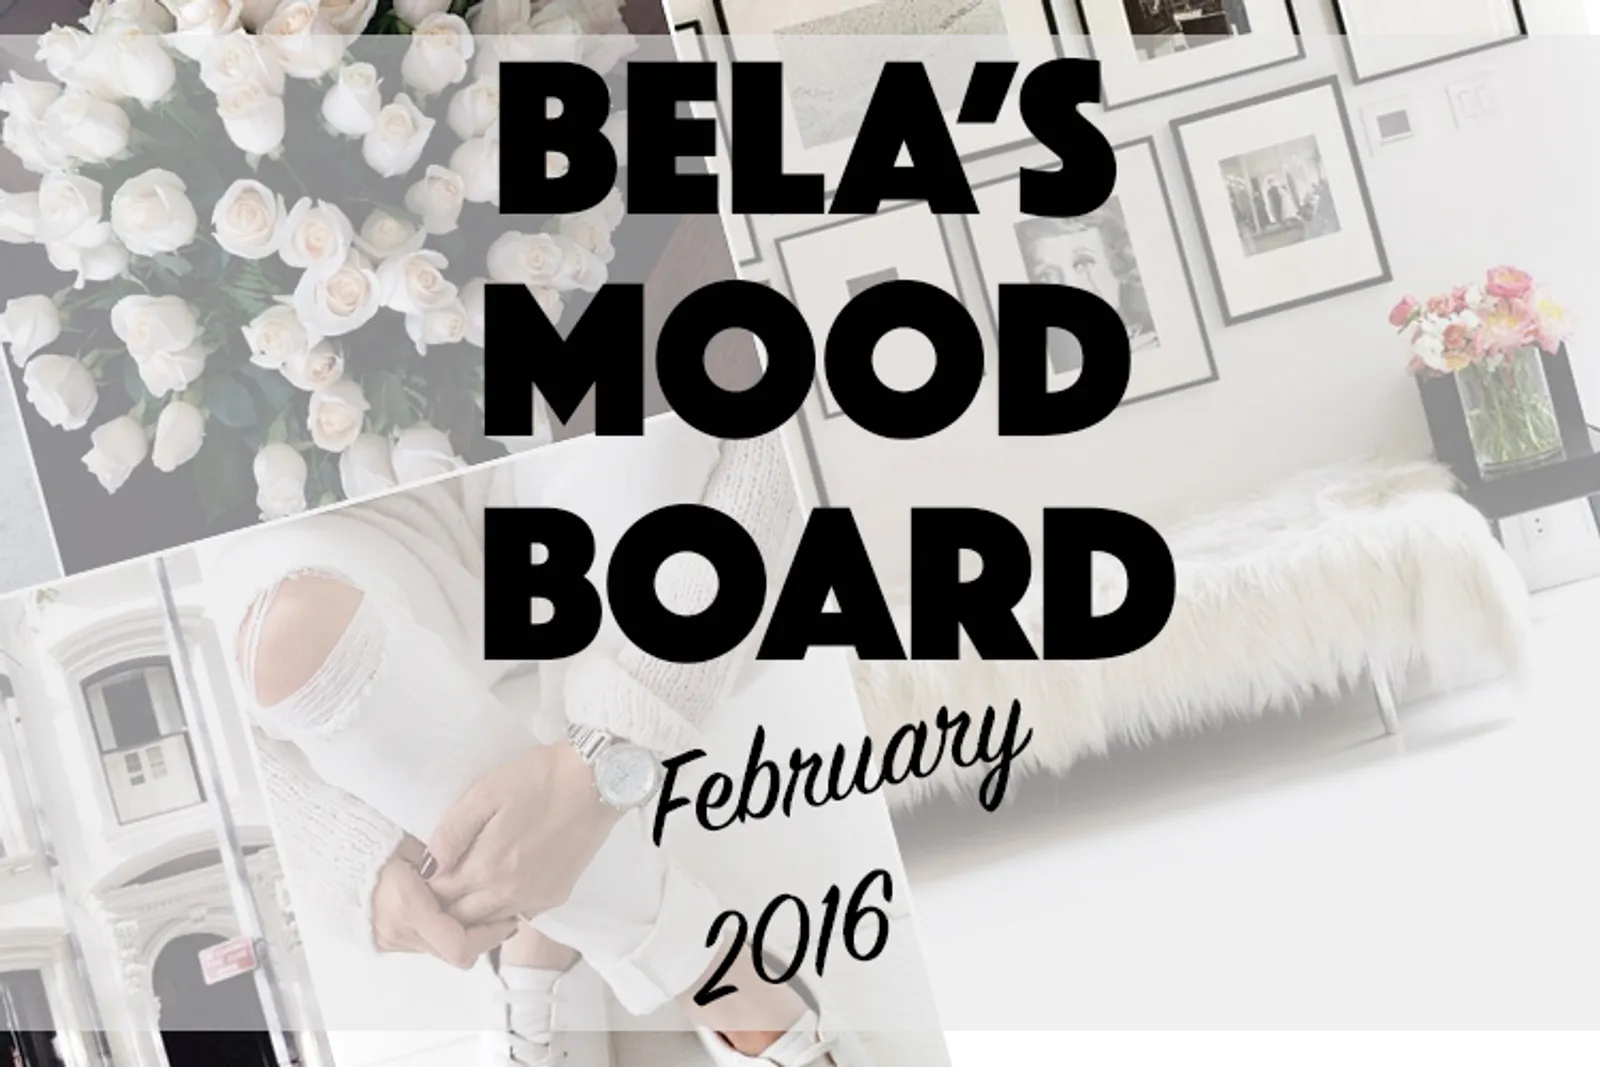 BELA'S MOOD BOARD: FEBRUARI 2016